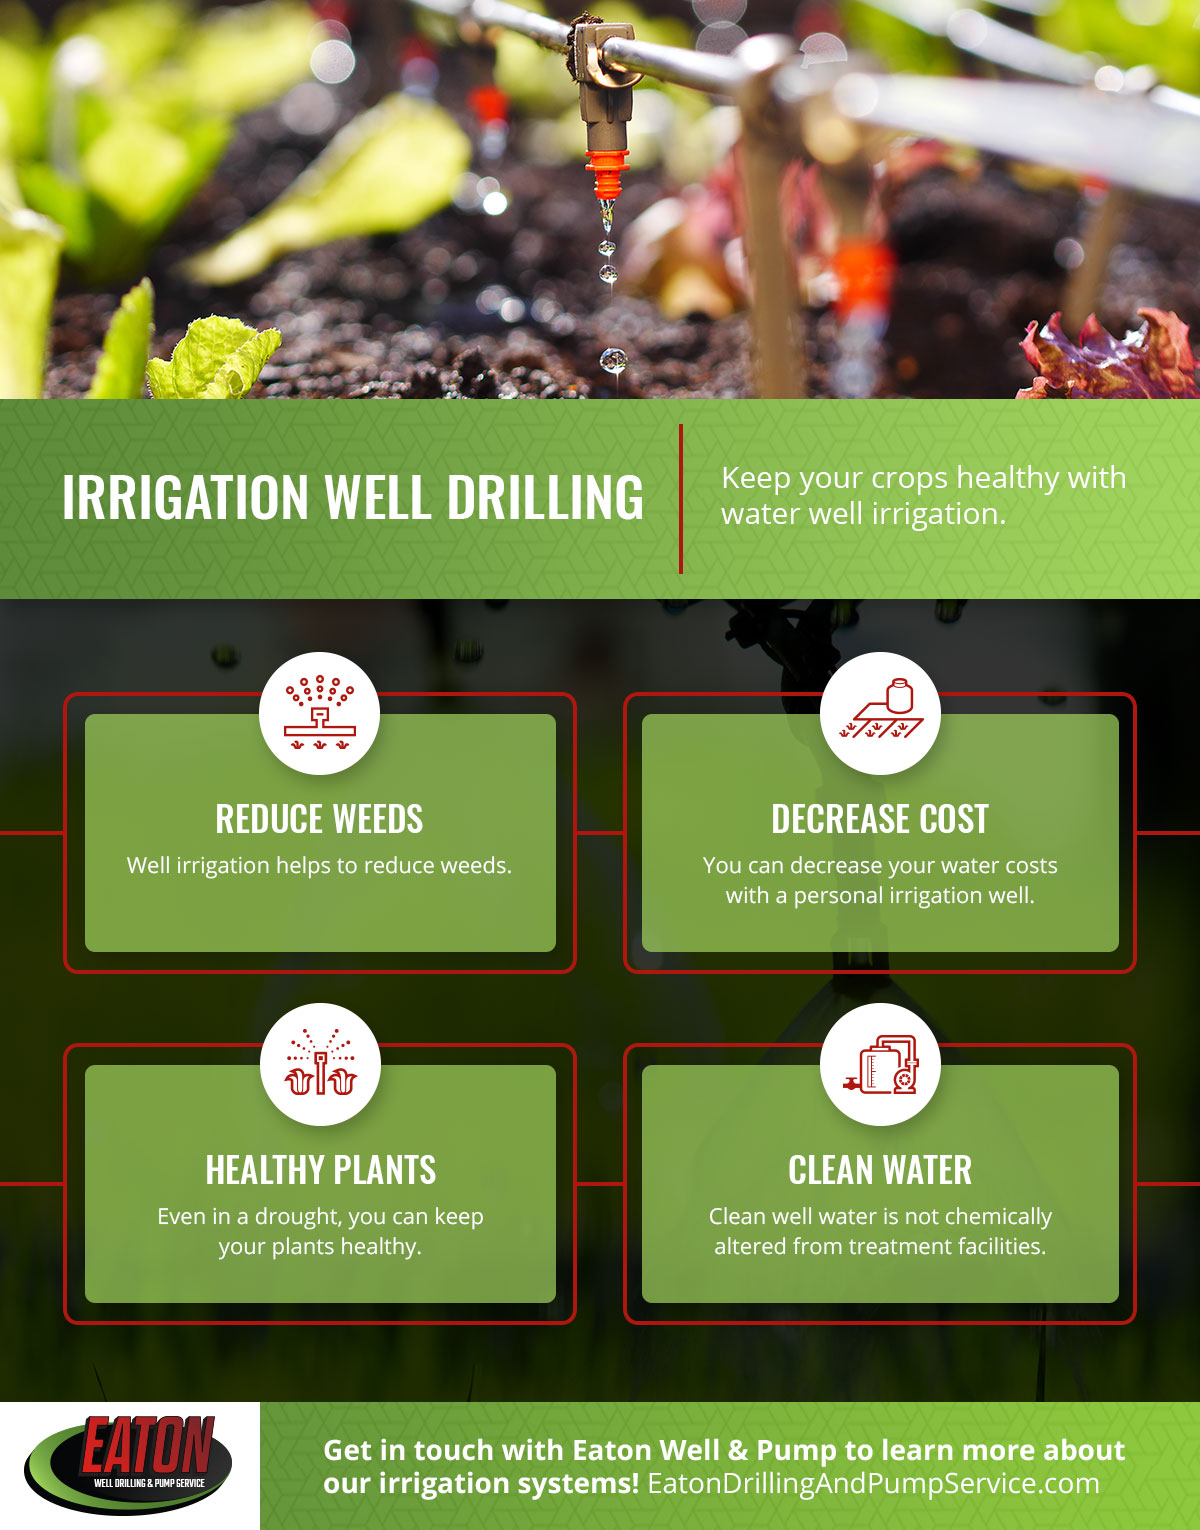 Irrigation-Well-Drilling-Infographic-5fdbdbdd452fb